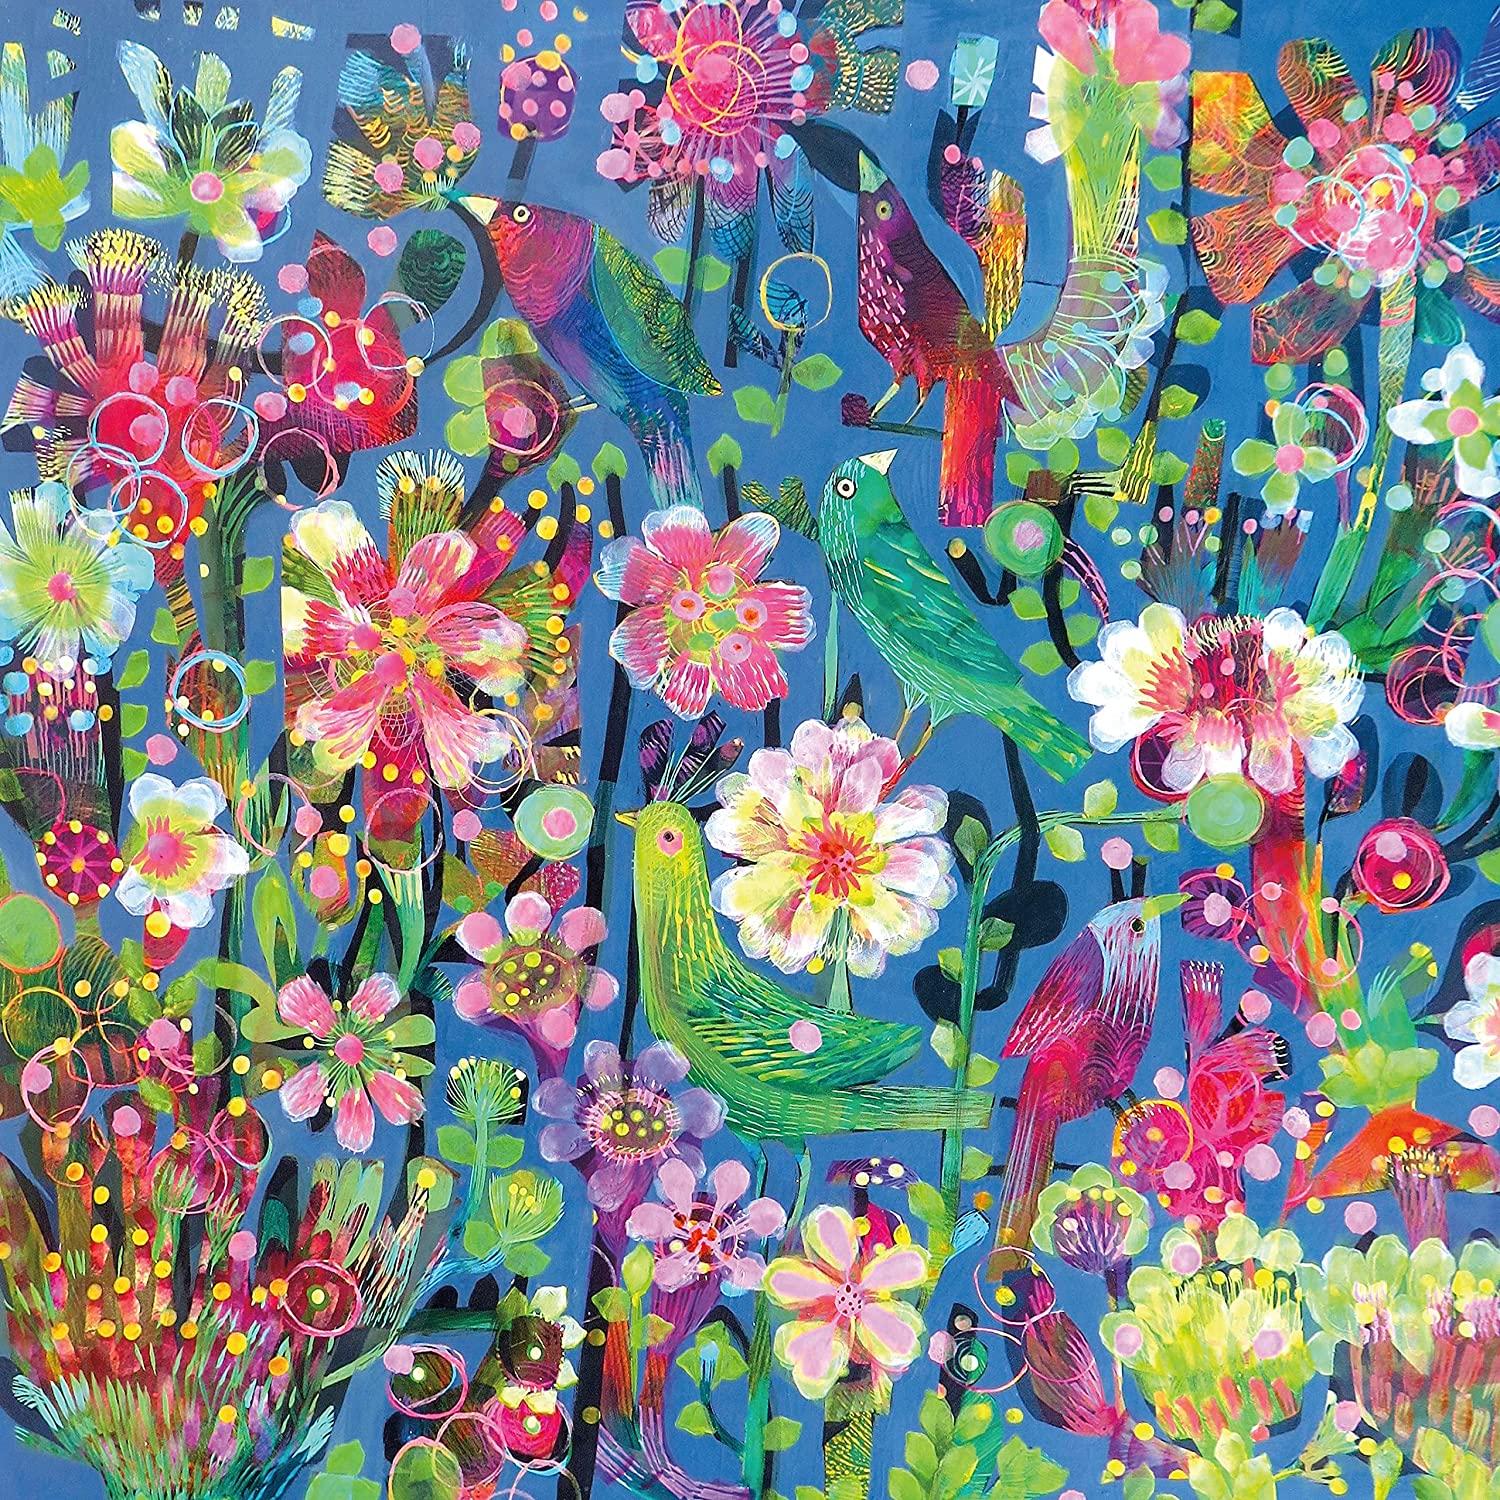 300 piece puzzle depicting colorful flowers.